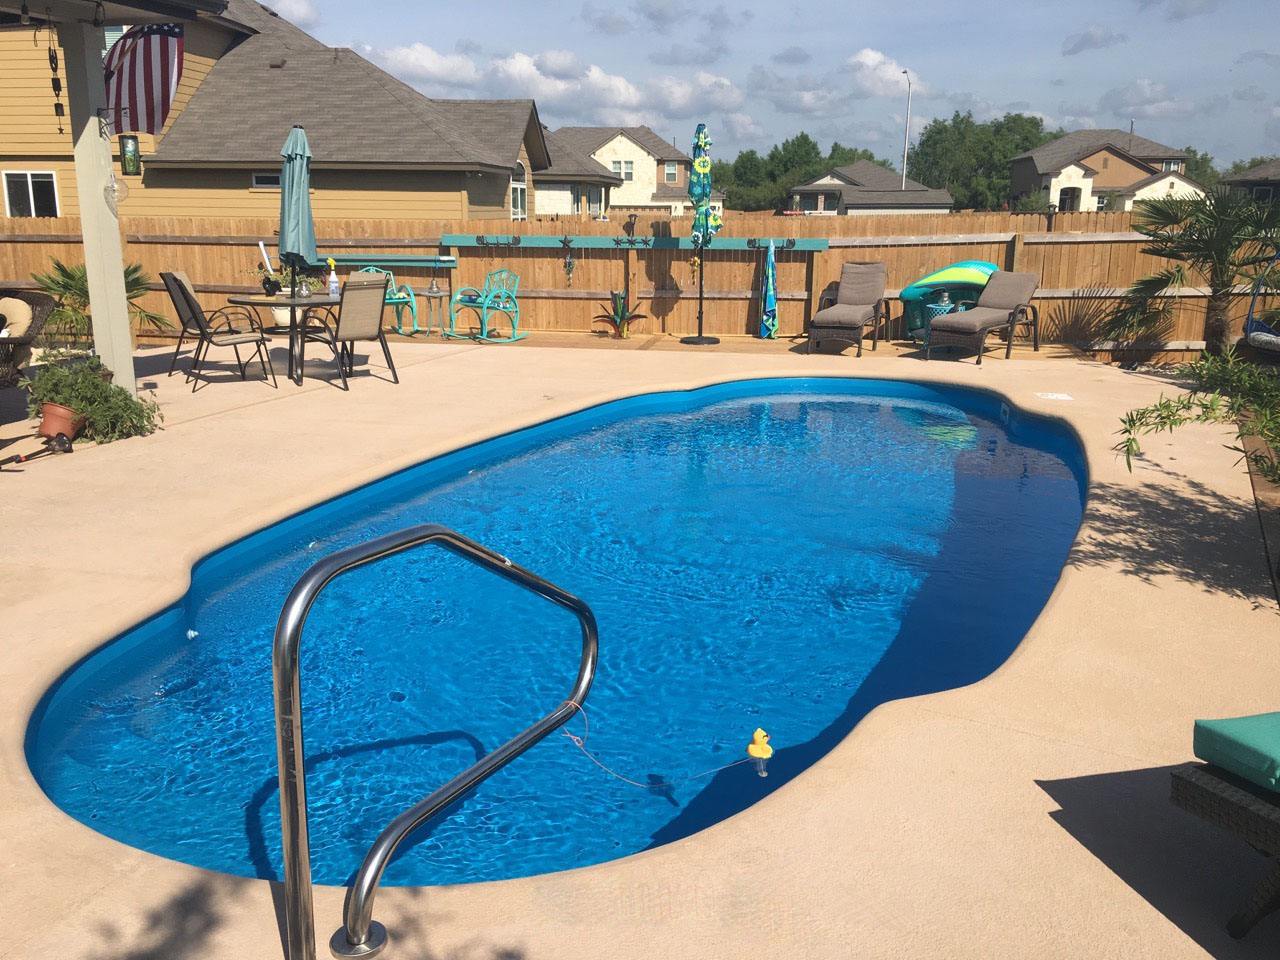 The El Dorado Model fiberglass pools San Antonio manufactured by Lonestar Fiberglass Pool New Braunfels Texas engineered for a lifetime